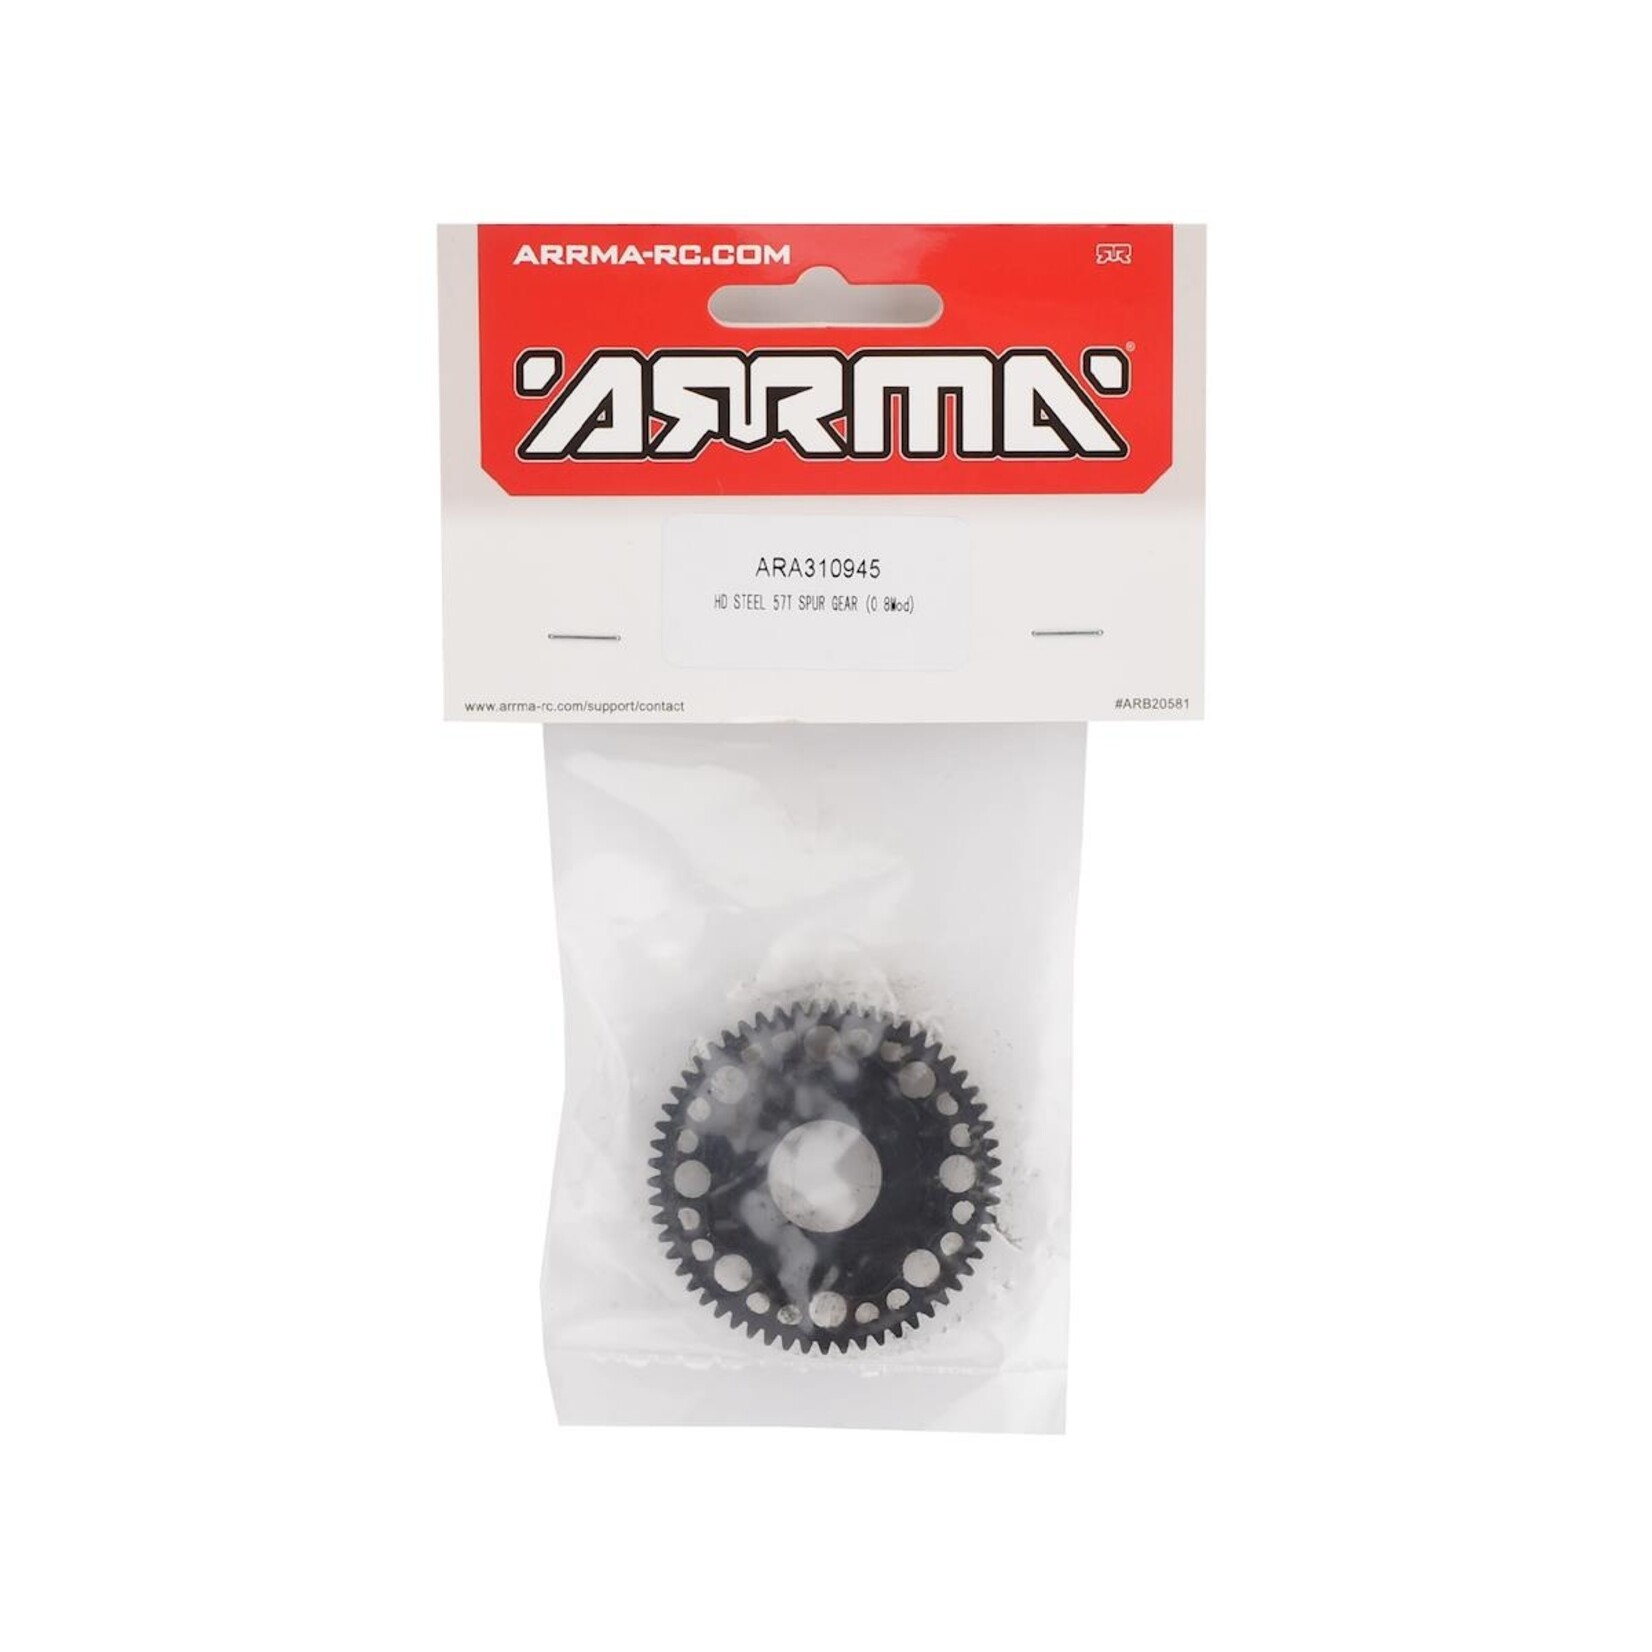 ARRMA Arrma 4S BLX 0.8Mod HD Steel Spur Gear (57T) #ARA310945